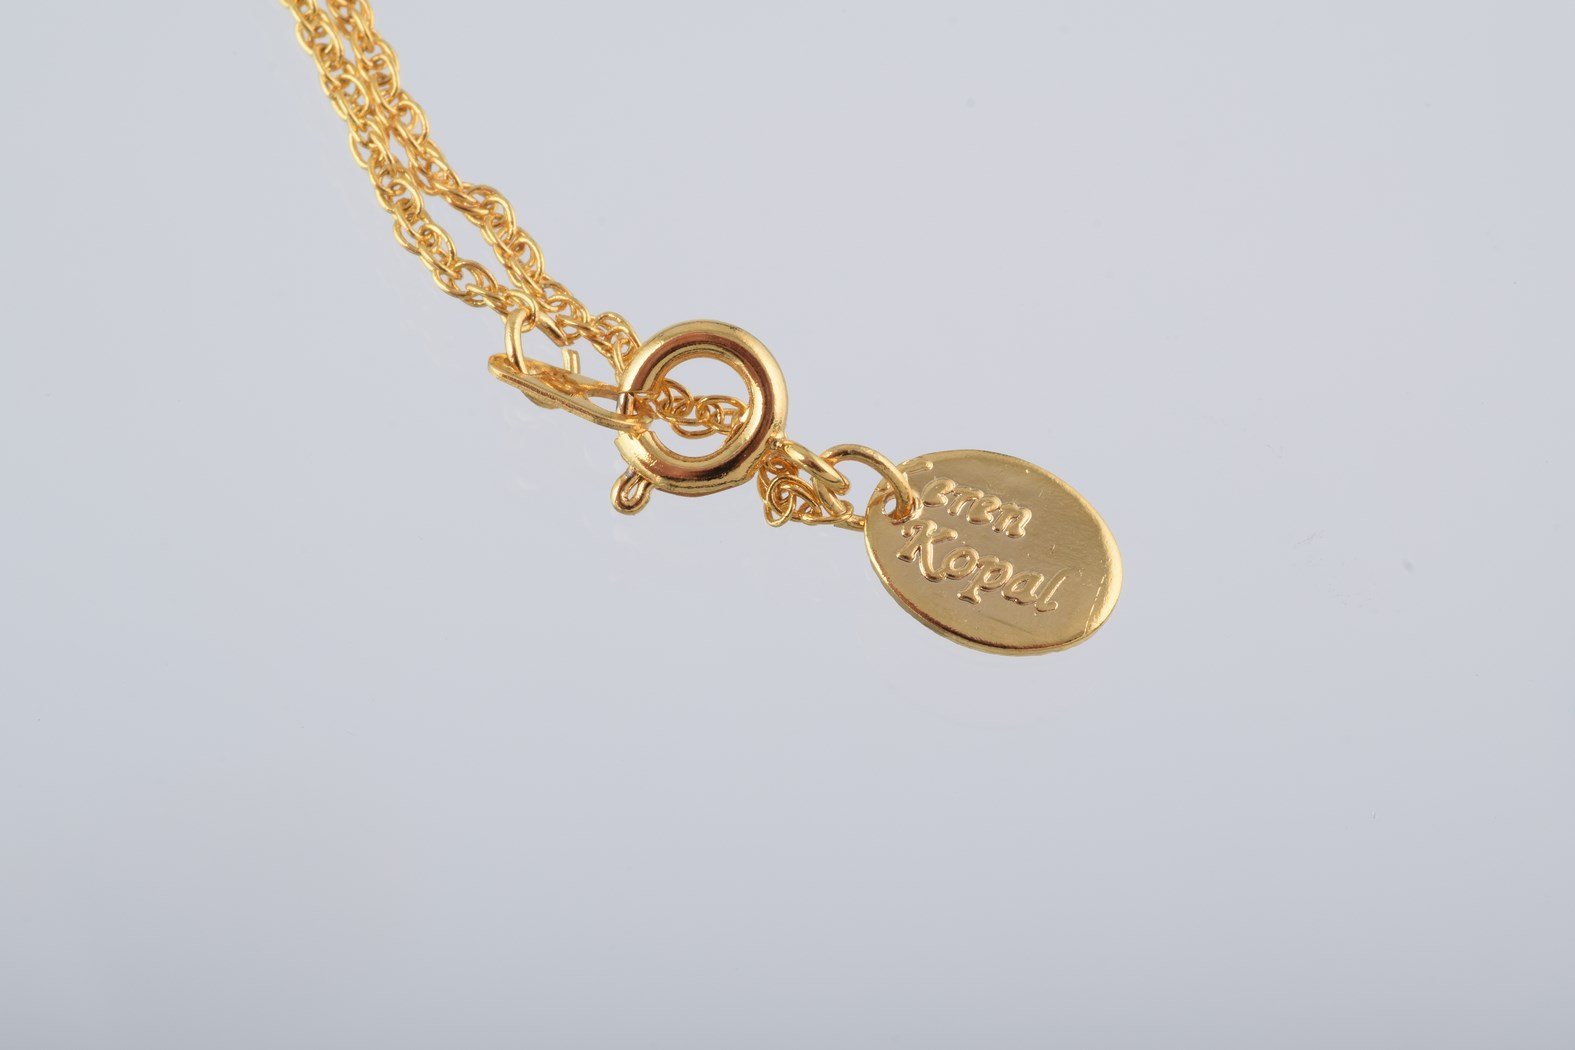 Keren Kopal Gold & Yellow Egg Pendant Necklace  39.00